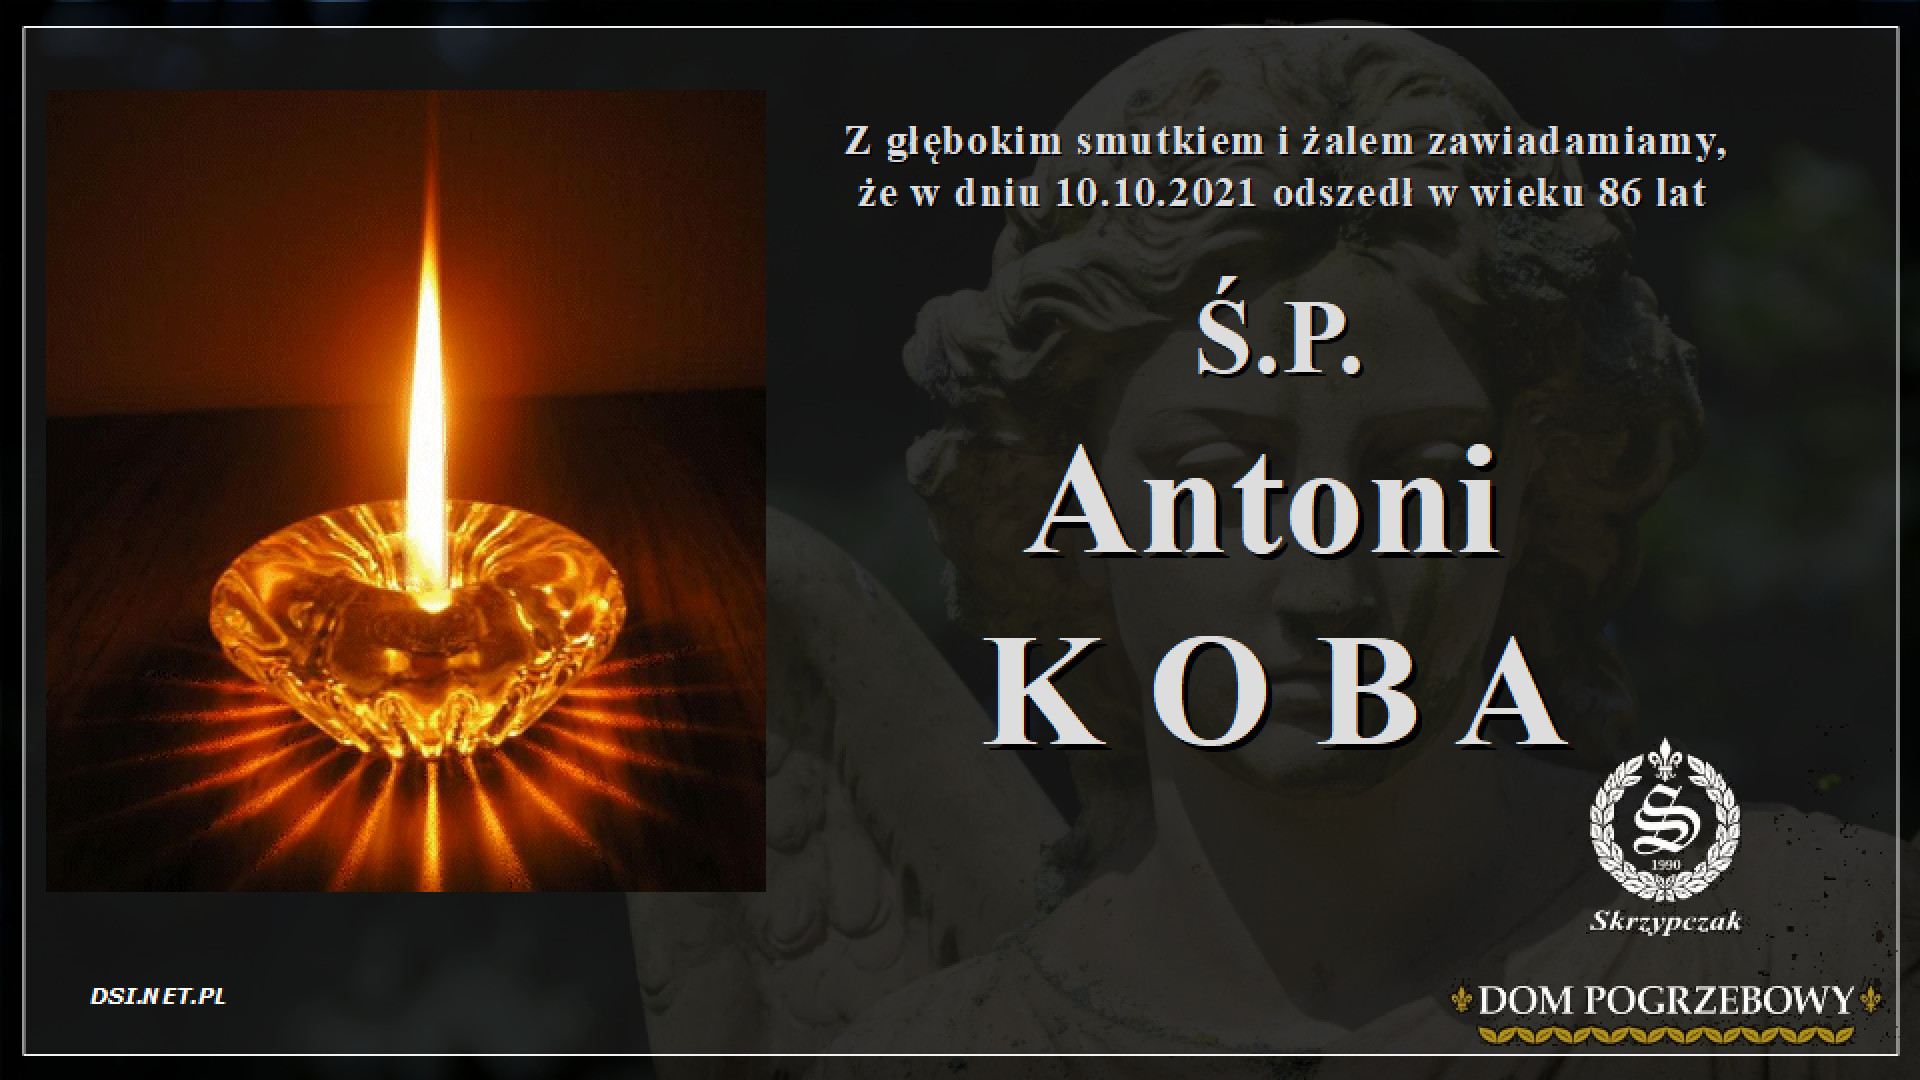 Ś.P. Antoni Koba